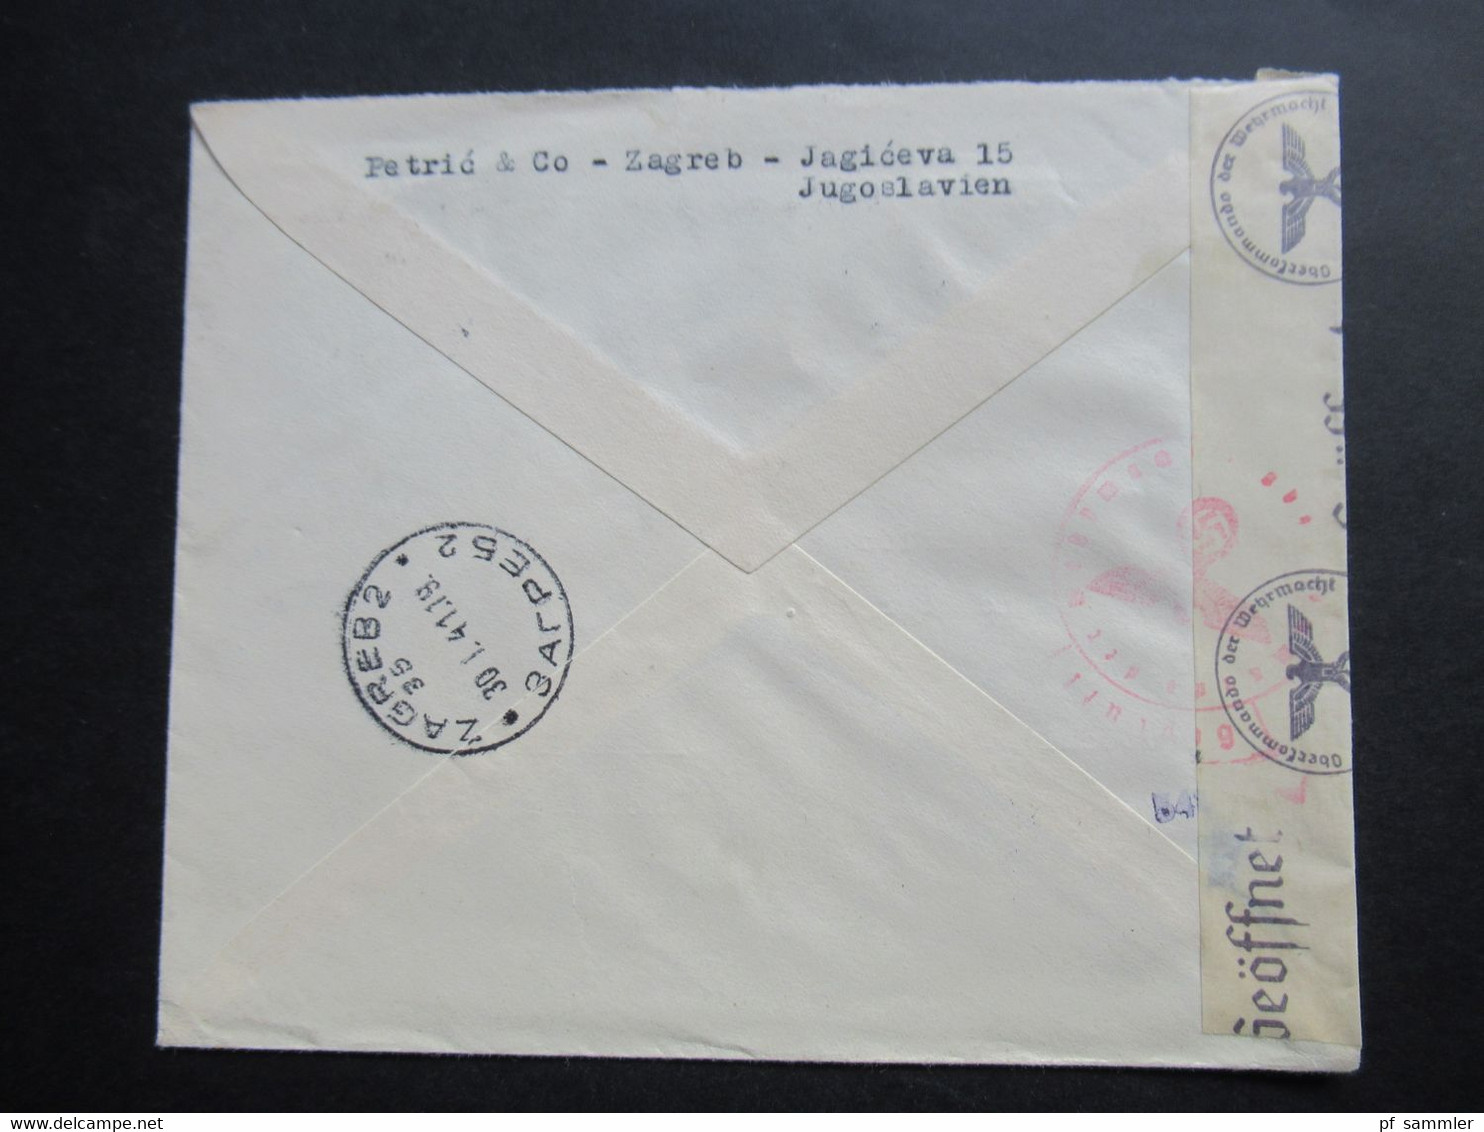 Jugoslawien 1941 Zensurbeleg / OKW Zensur / Mehrfachzensur Luftpost Zagreb An Westphalen & Co. In Hamburg - Covers & Documents